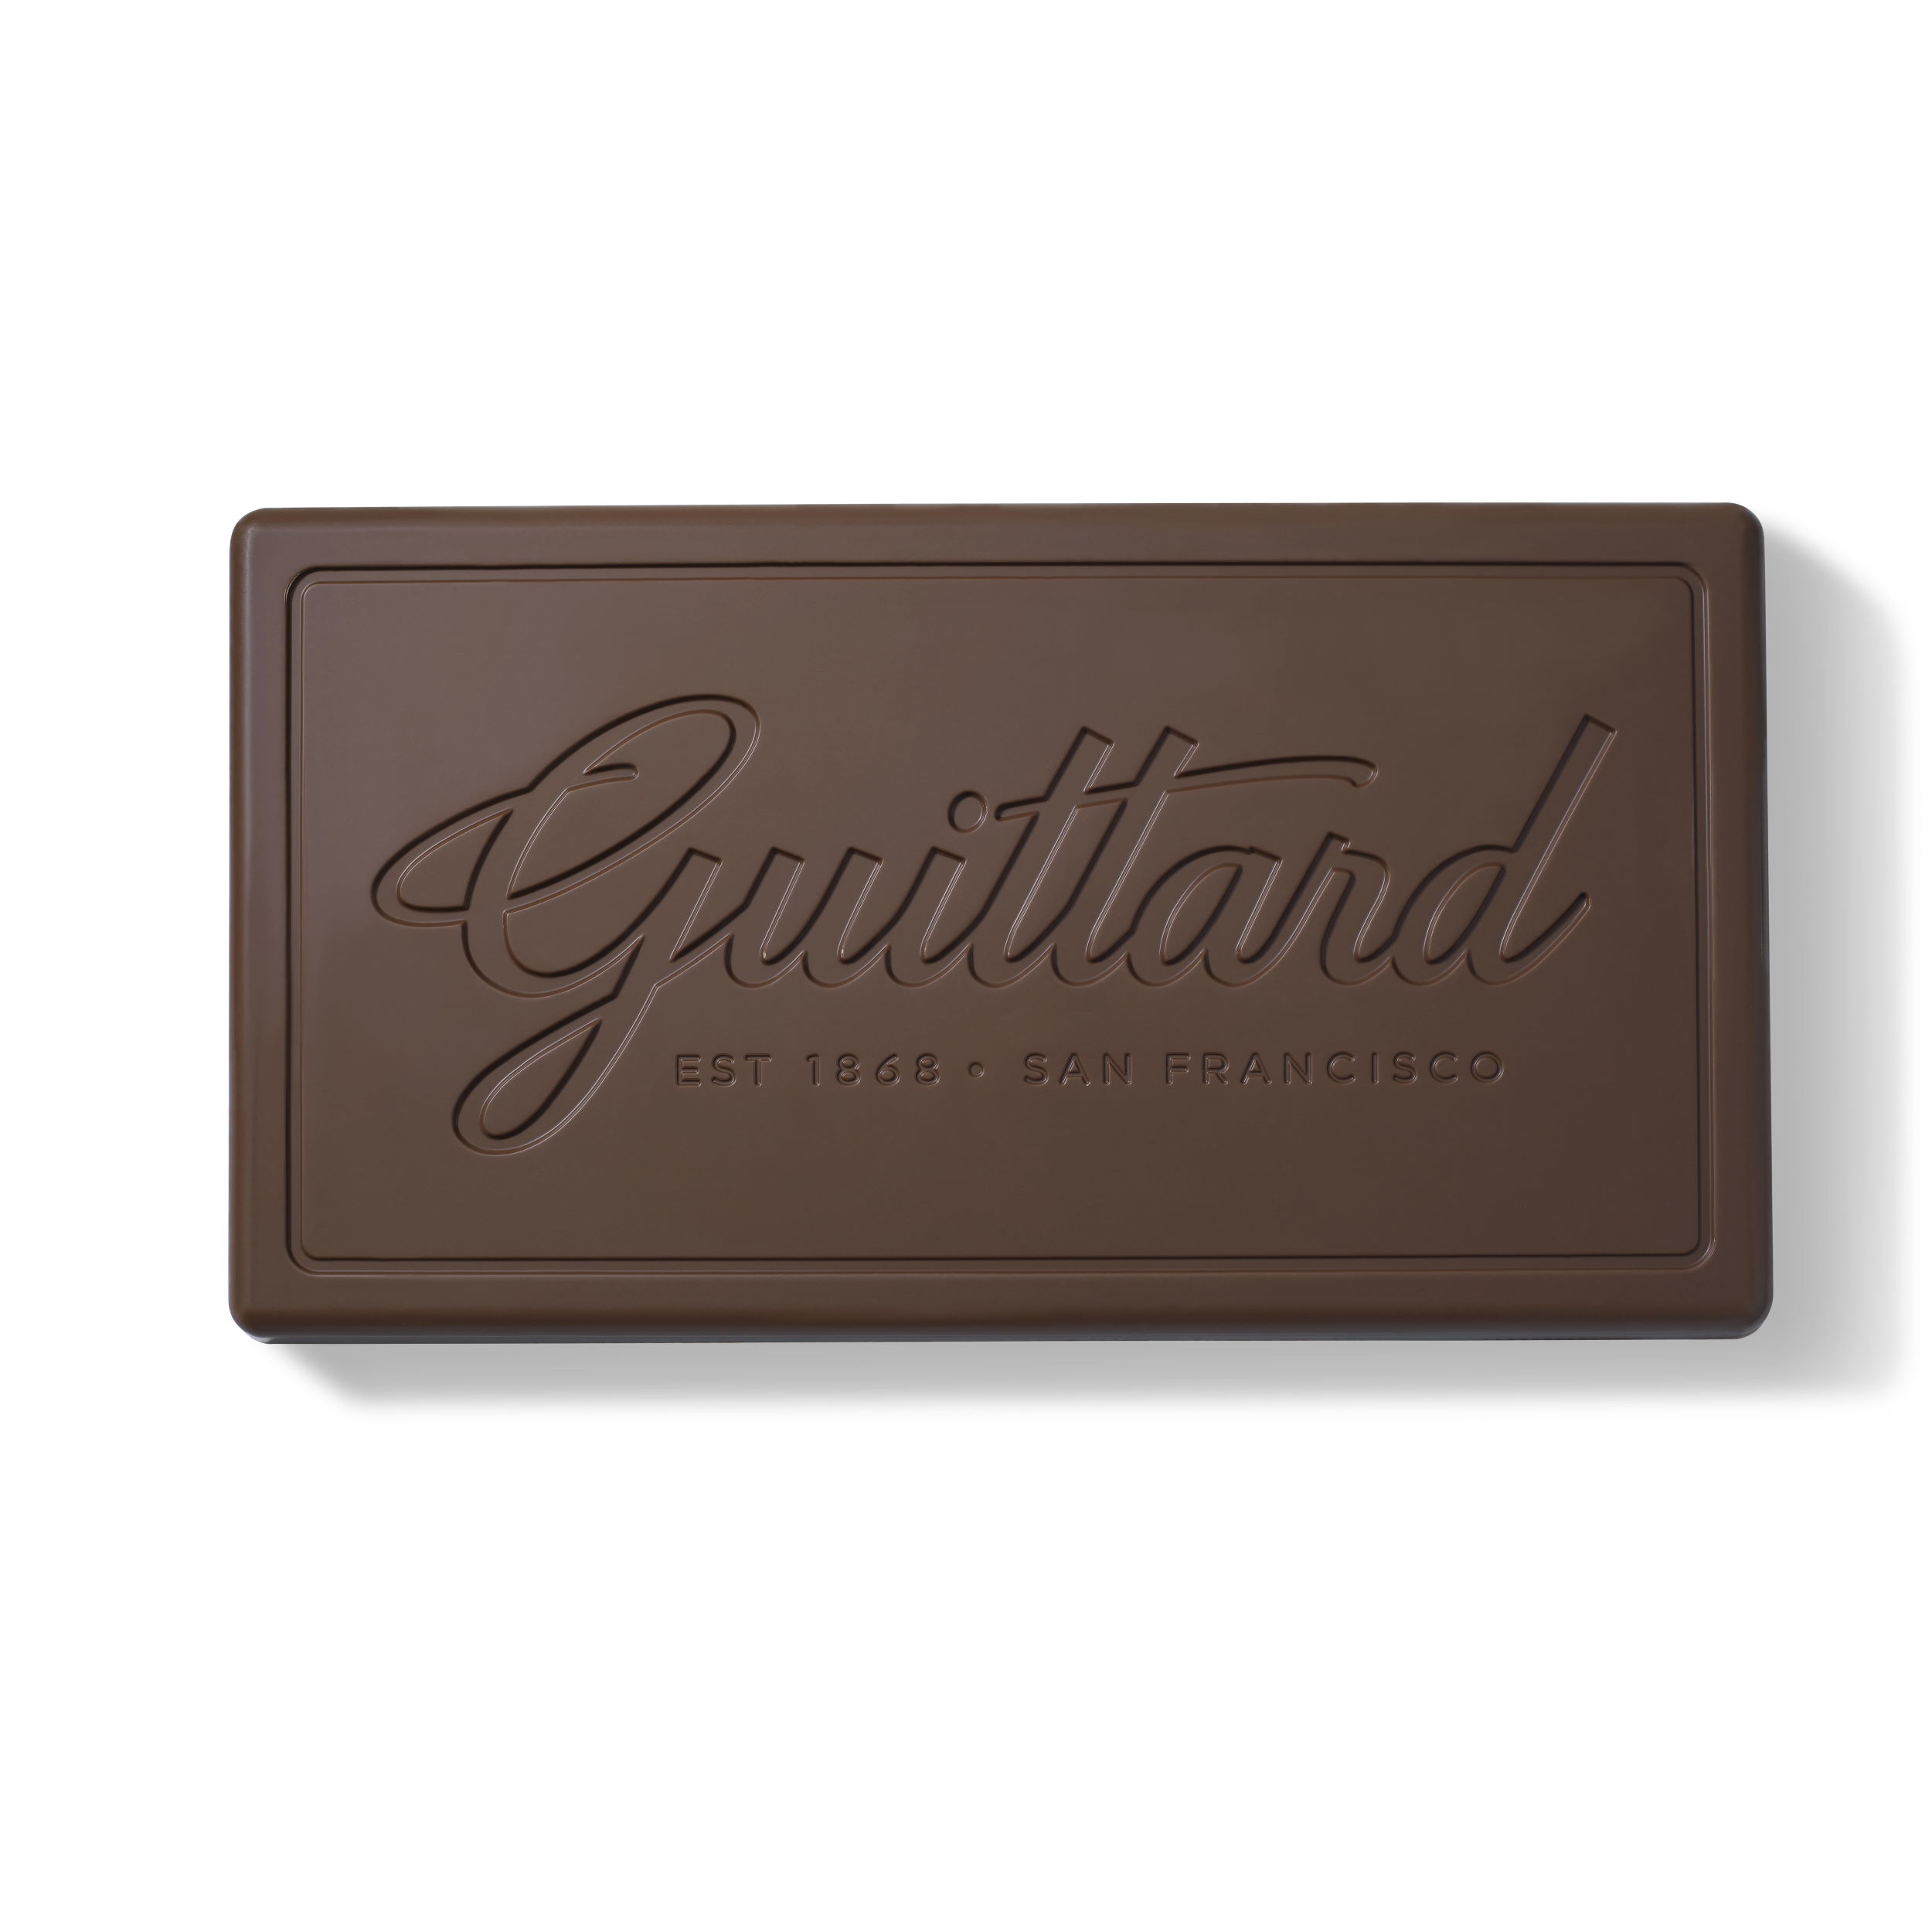 Guittard Solitaire 52% Dark Couverture Chocolate Block